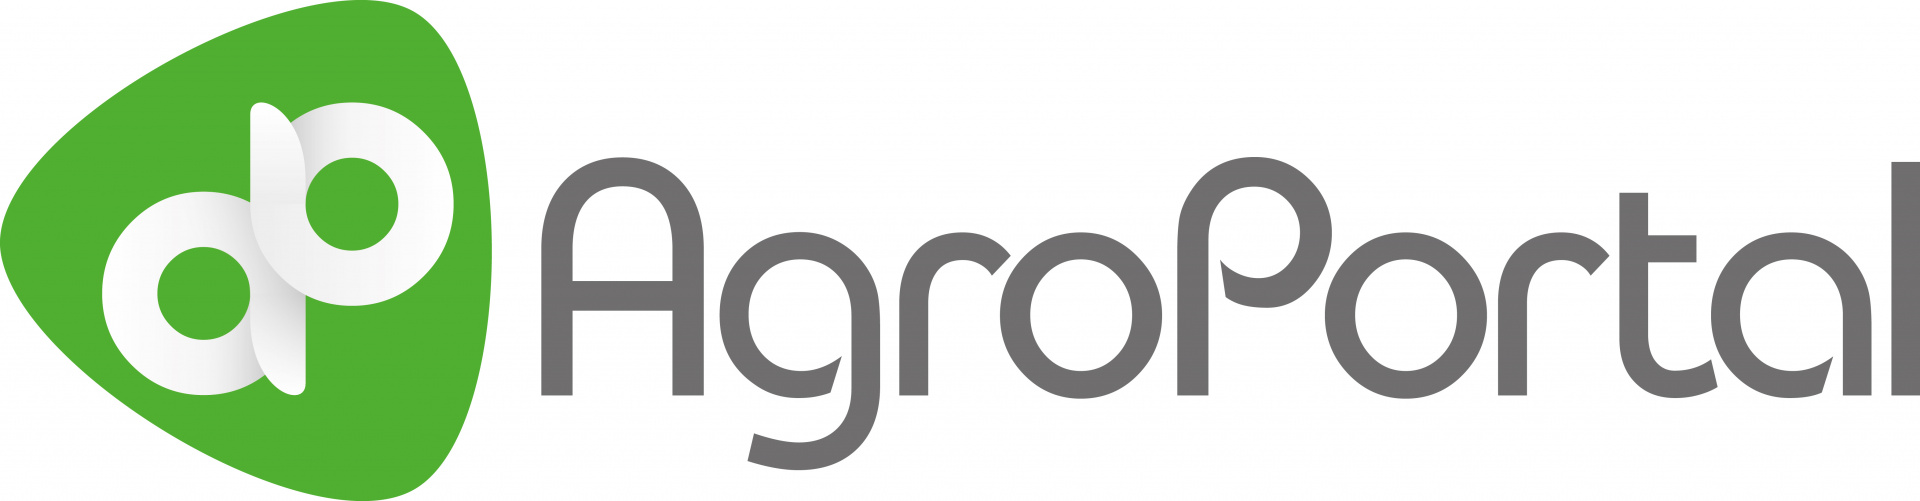 AGROportal_logo.JPG